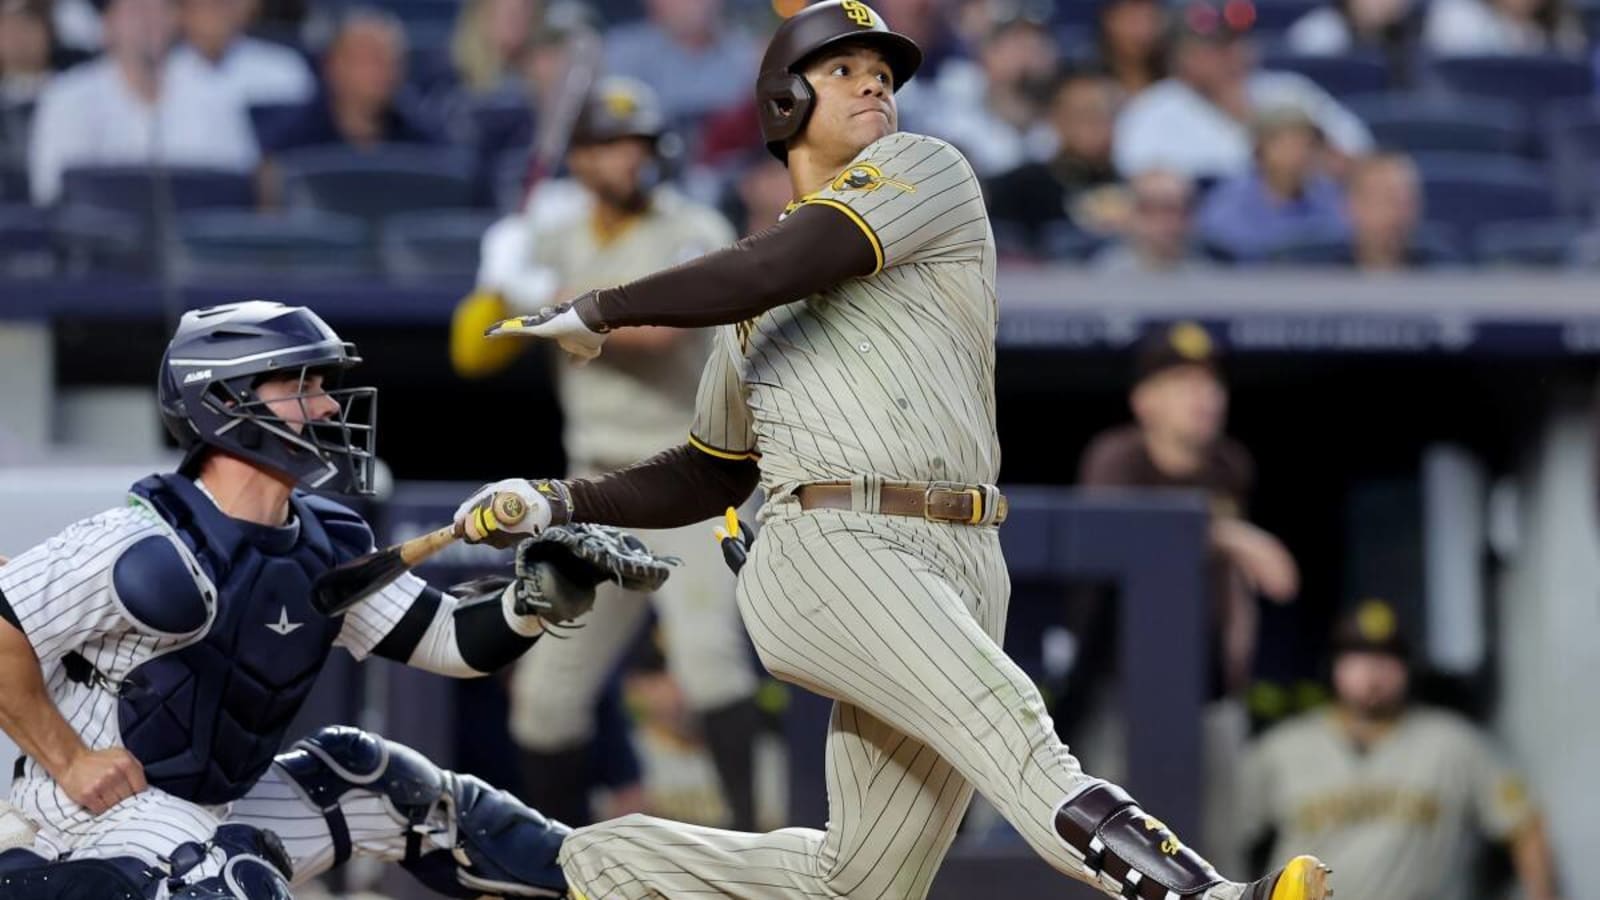 San Diego Padres rumors and news: Juan Soto, Yankees, Phillies